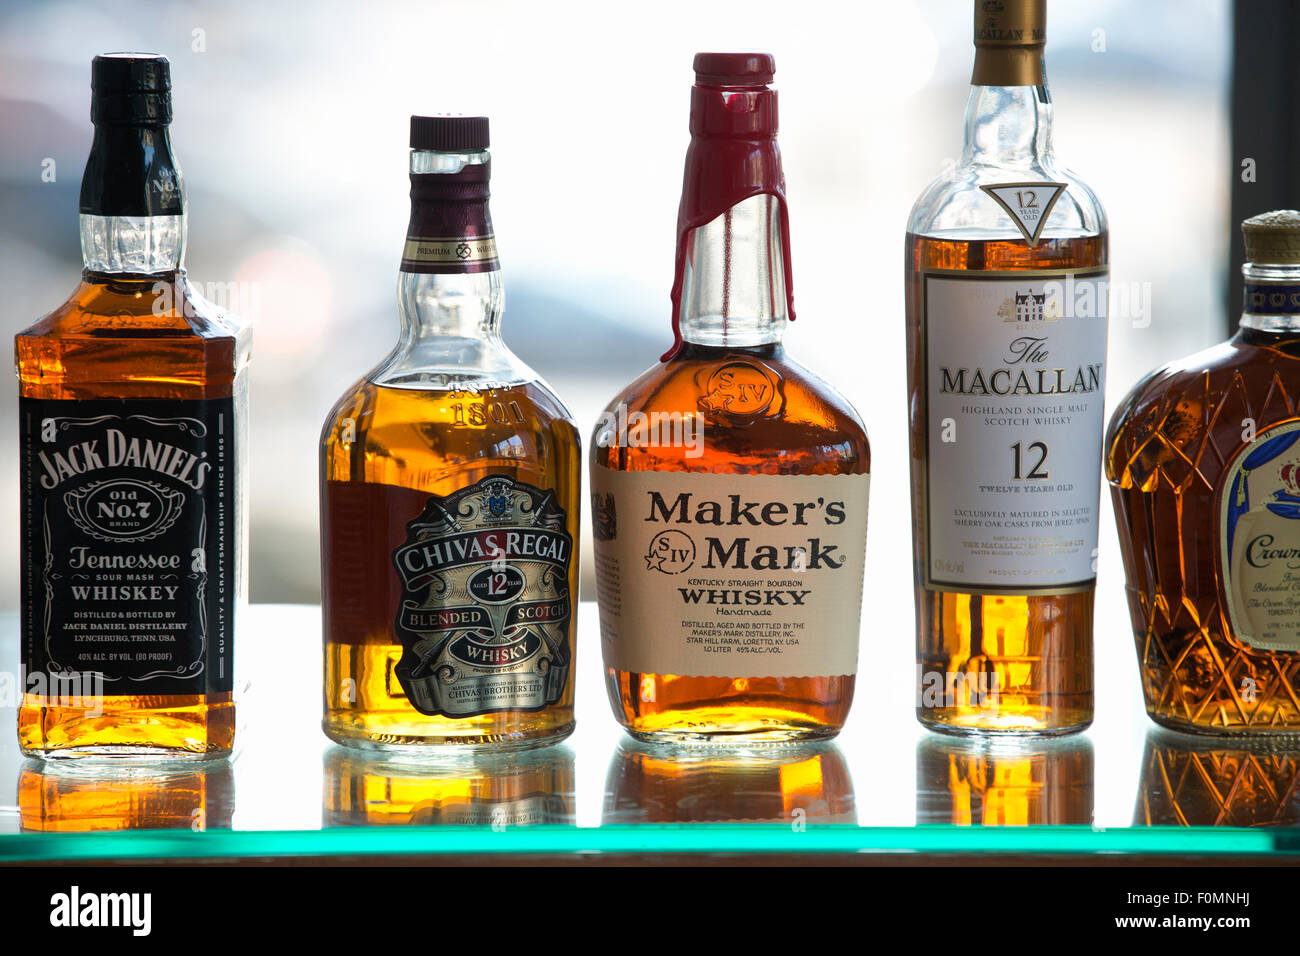 Whisky-Flaschen Regal Stockfotografie - Alamy